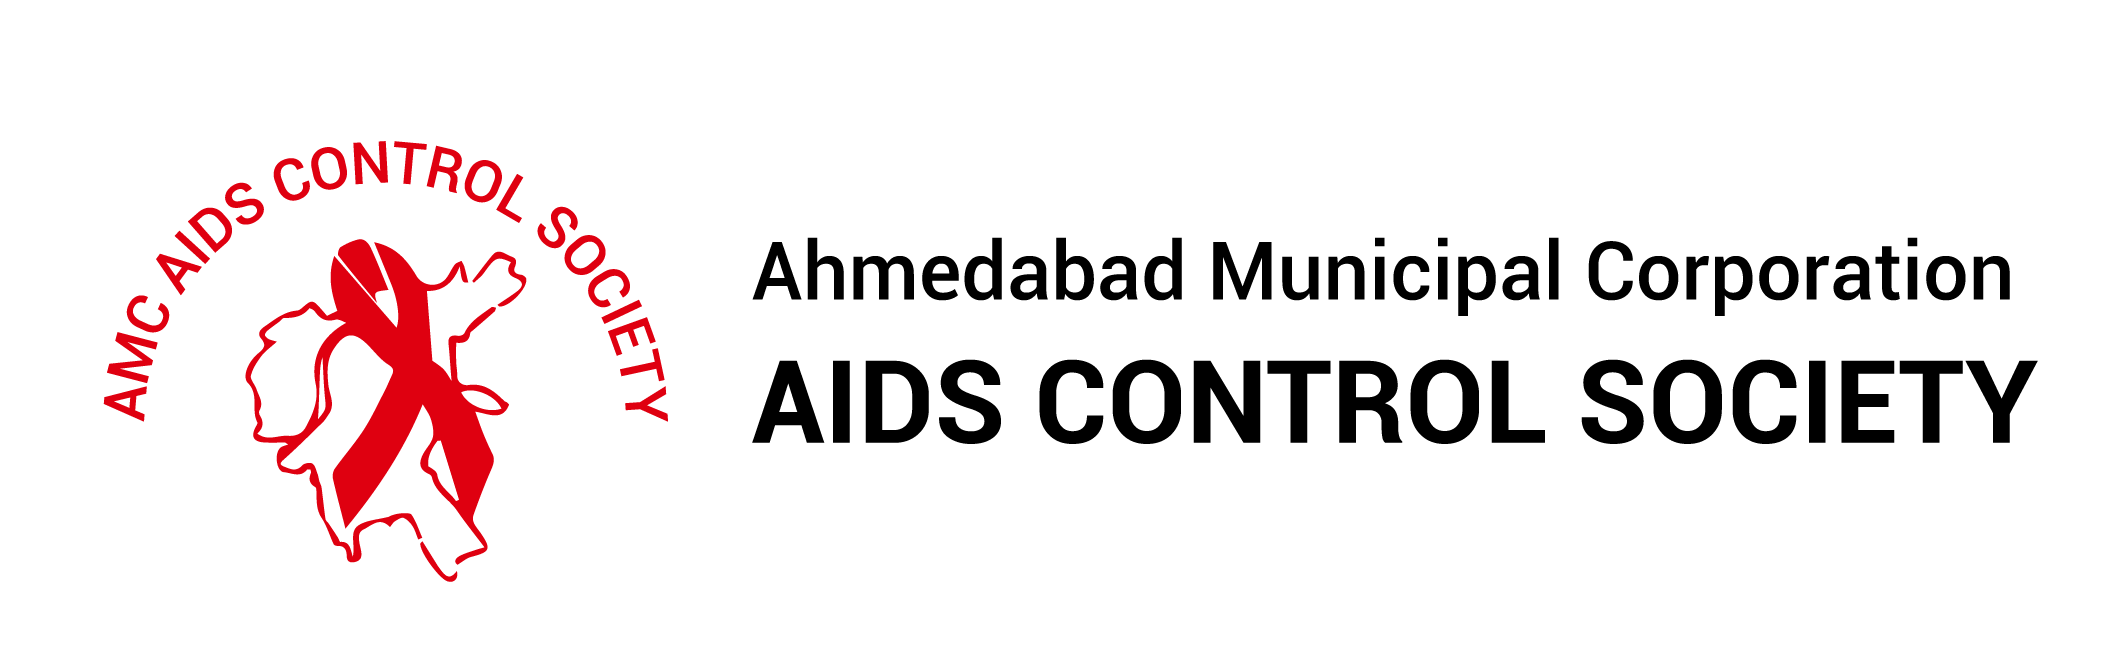 Aids Control Society Ahmedabad